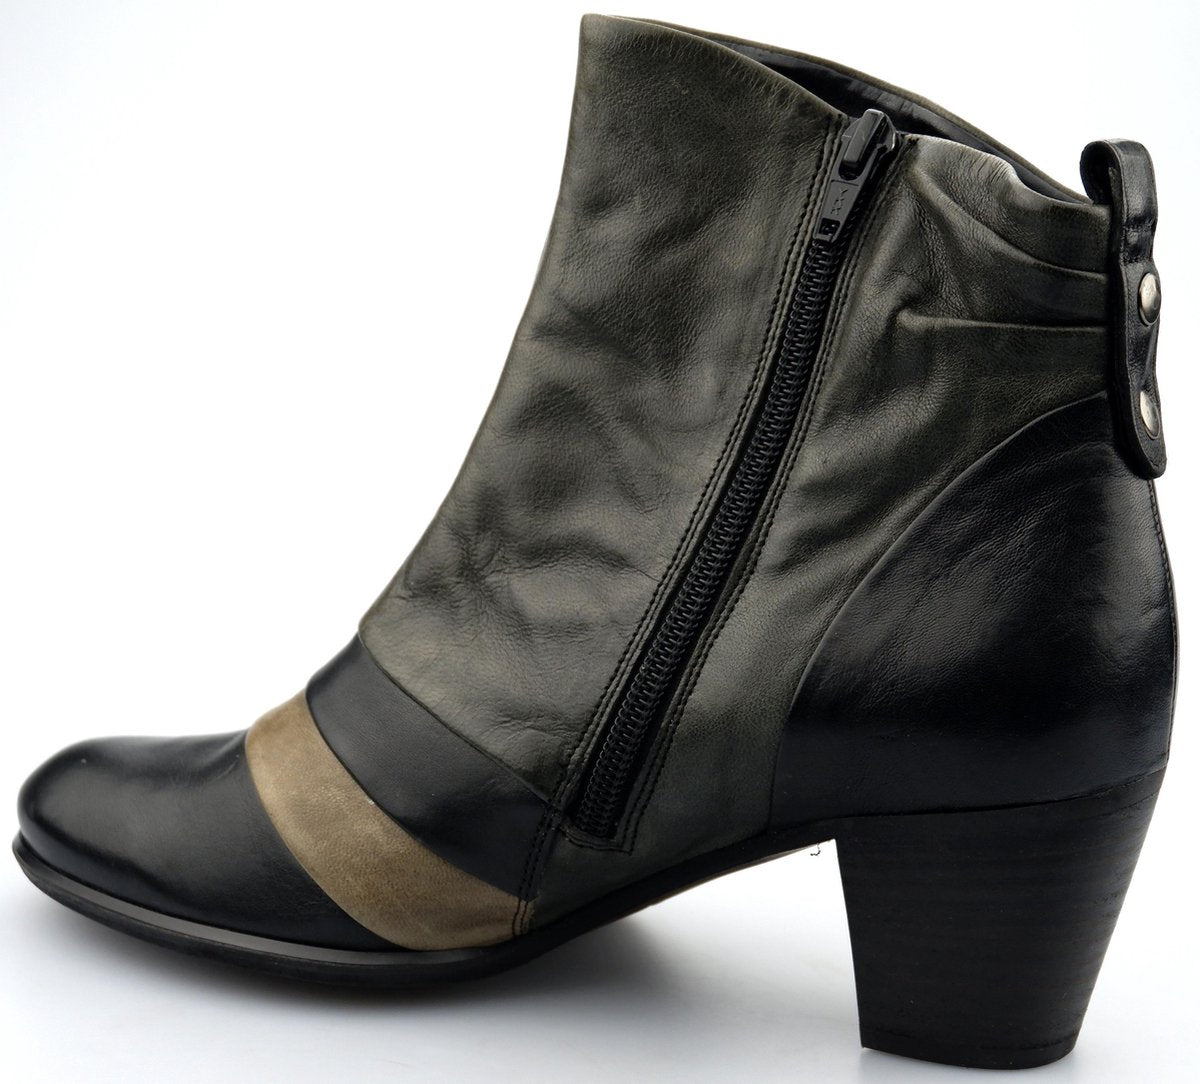 Gabor '15.780.60' women's ankle boot - ChaplinshoesGabor '15.780.60' women's ankle bootGabor